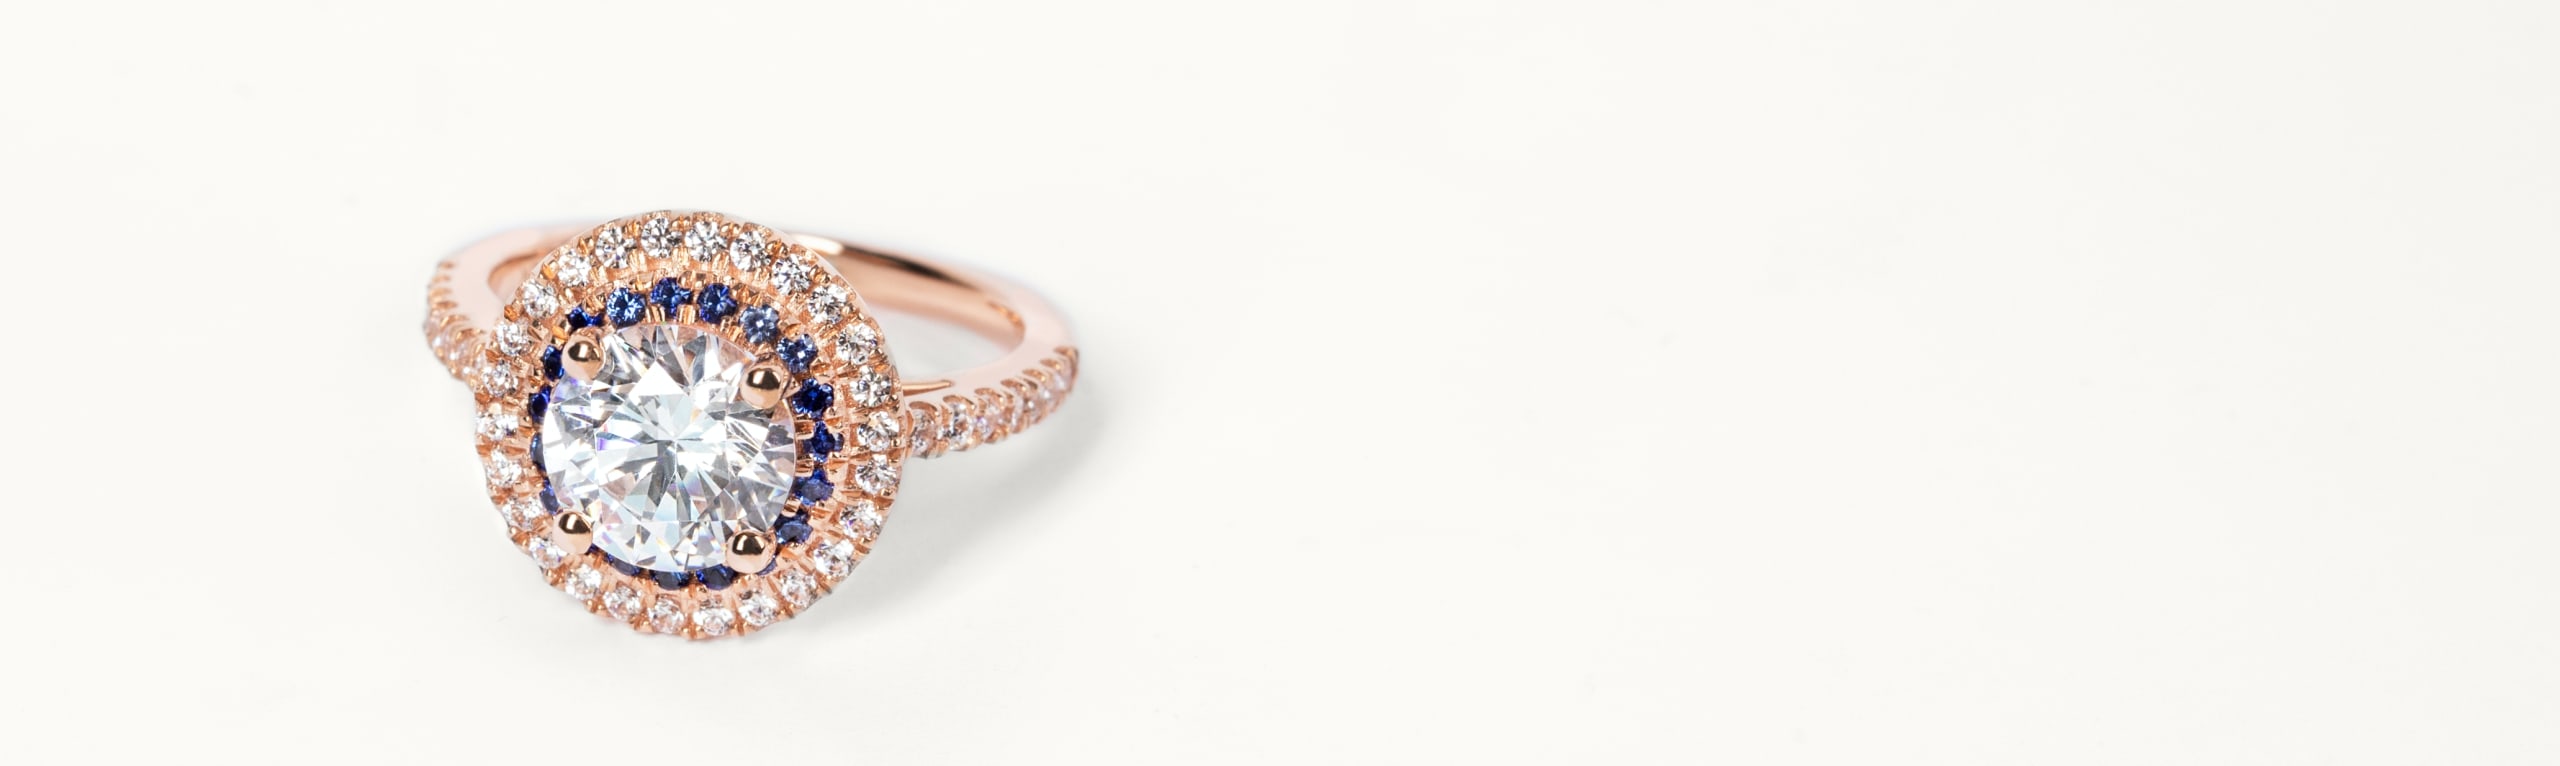 Big diamond cut flower ring. 925 silver and diamond cut stone. | Instagram